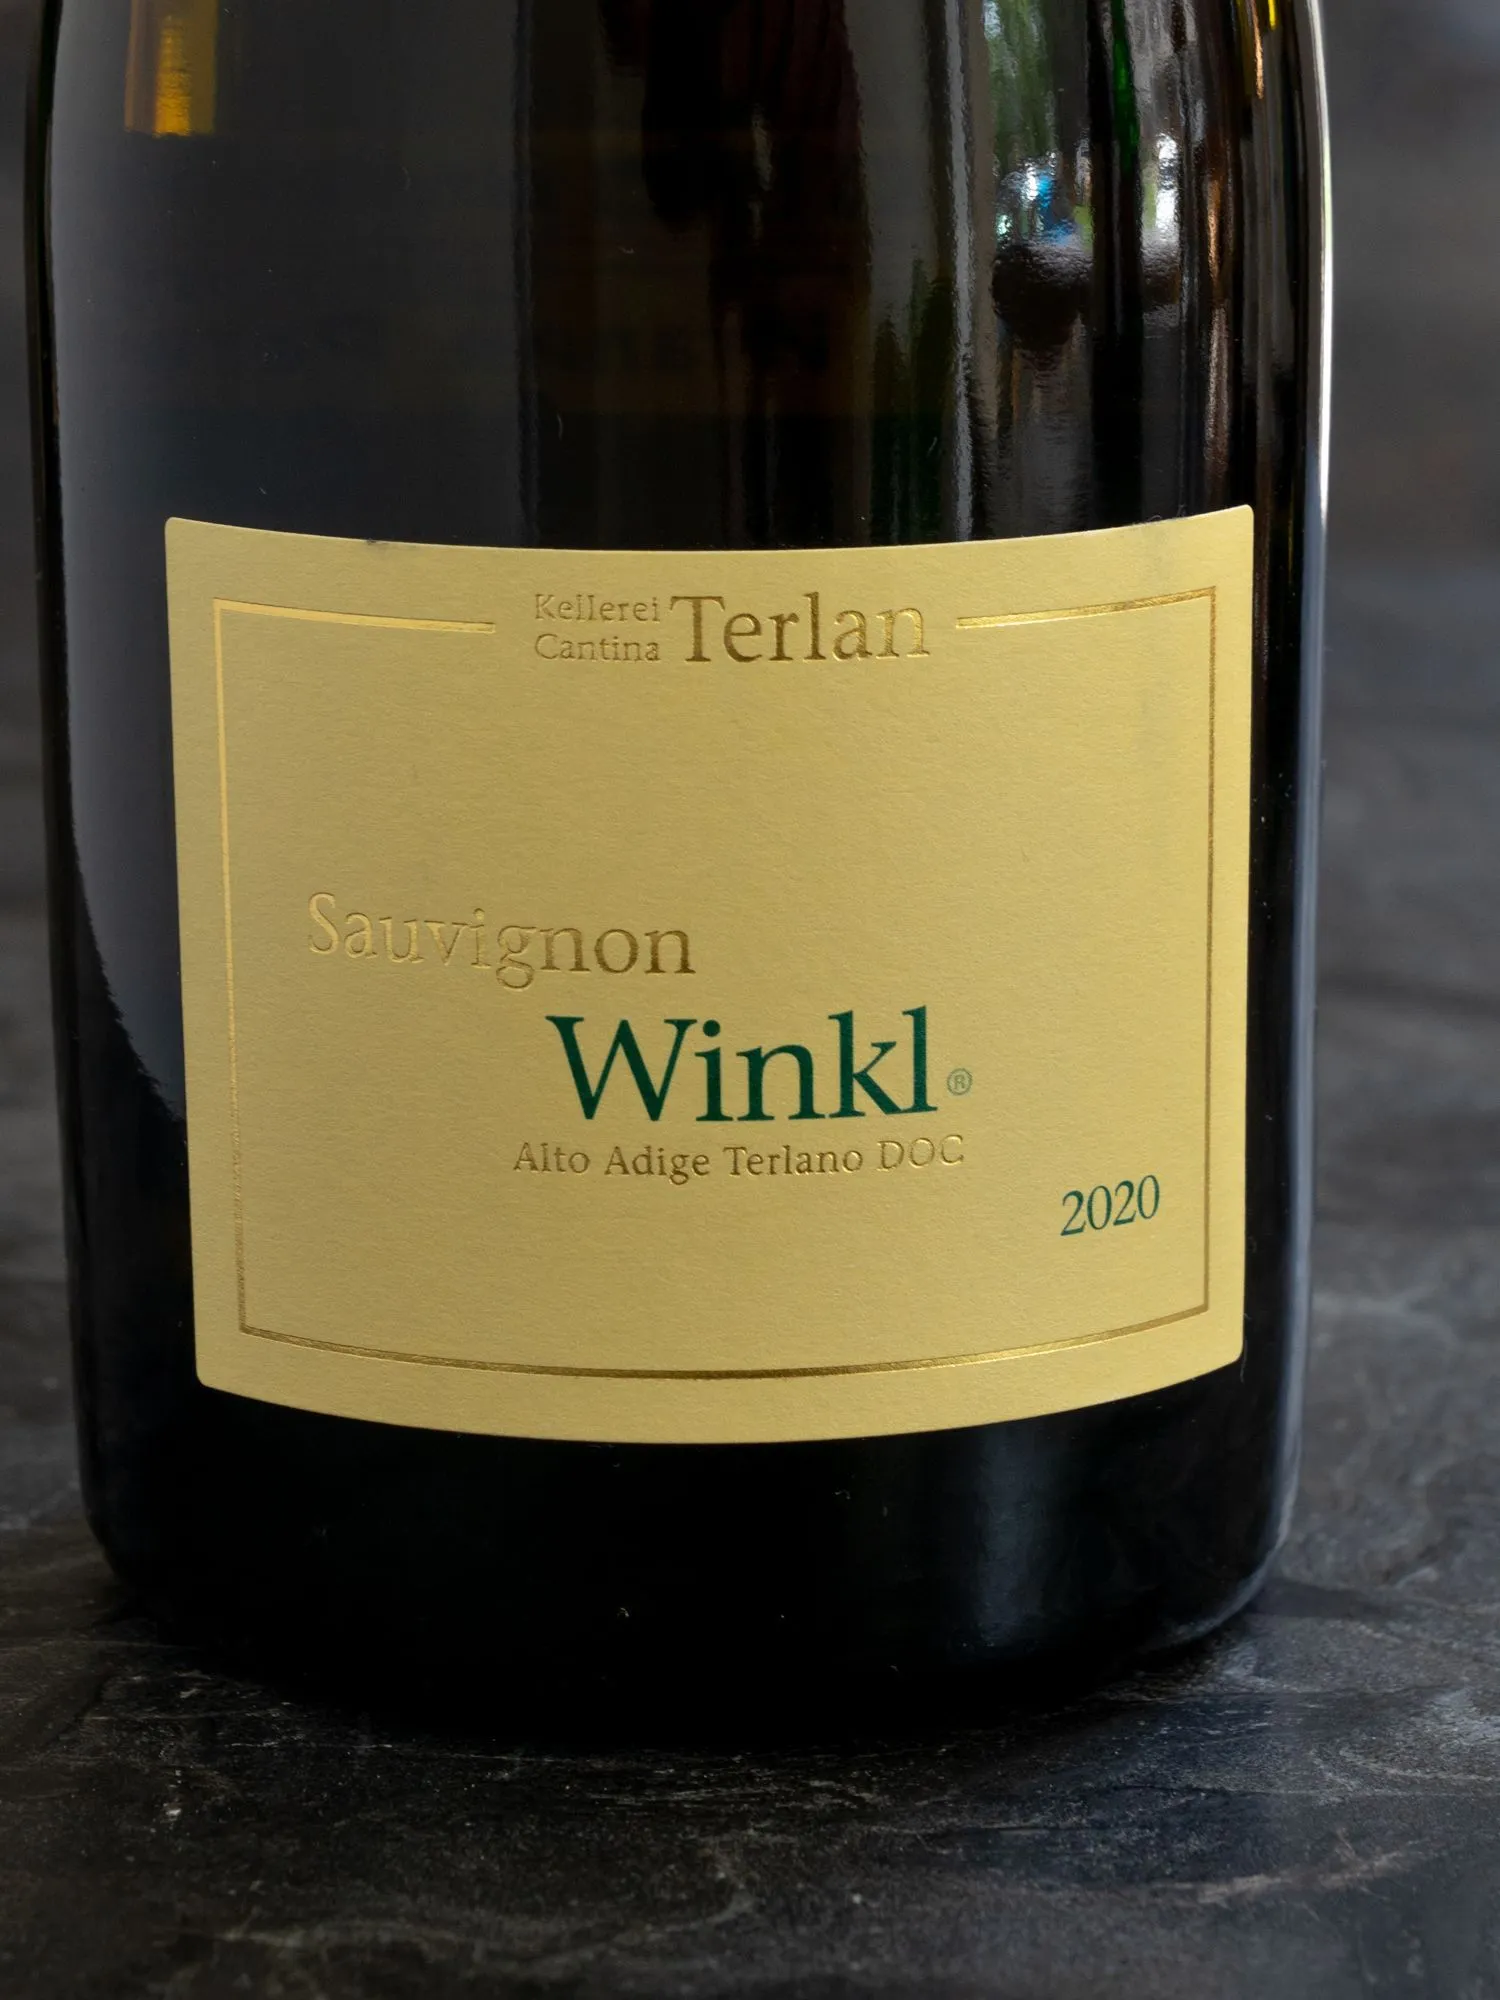 Вино Cantina Terlano Winkl Sauvignon Alto Adige / Альто Адидже Терлано Совиньон Блан Винкль